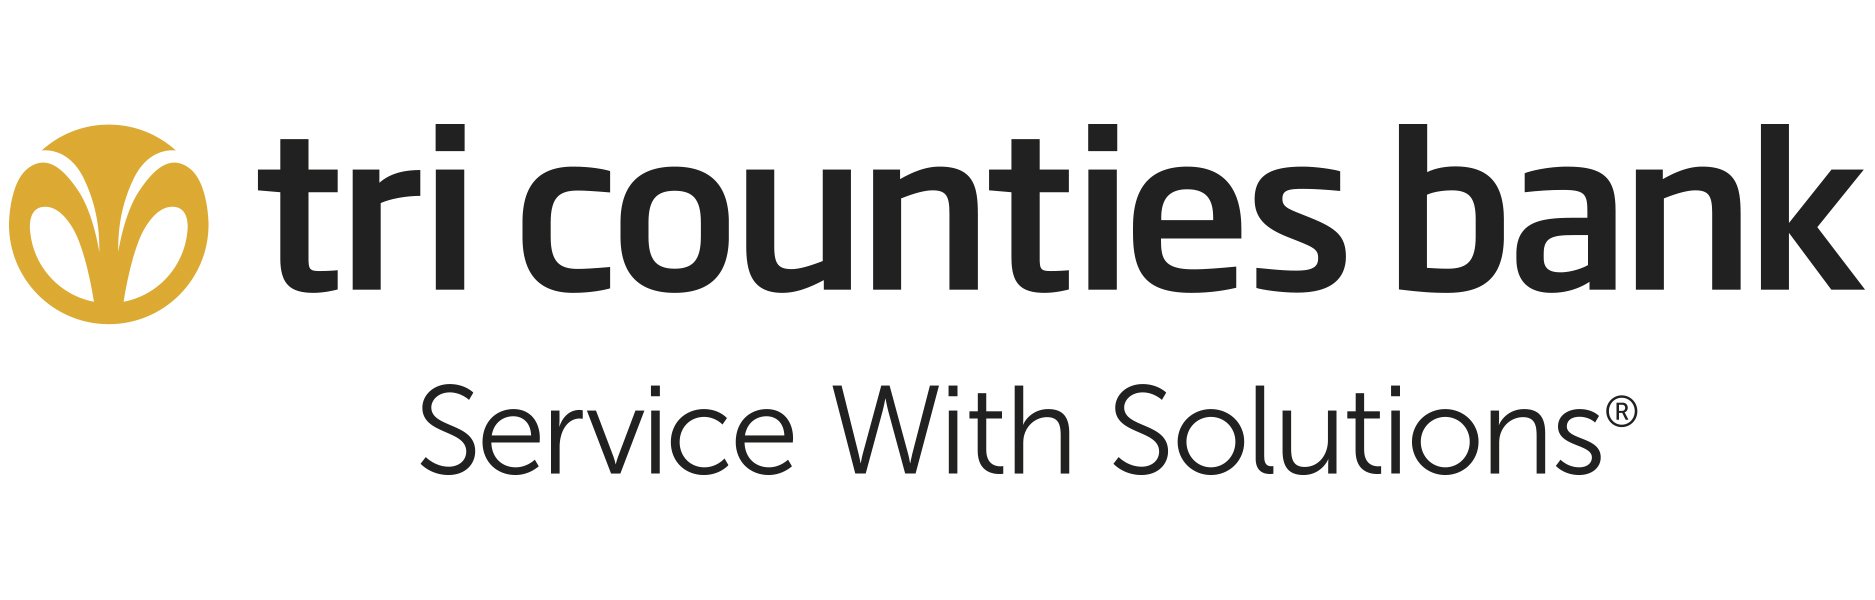 tri-counties-bank-logo.jpg